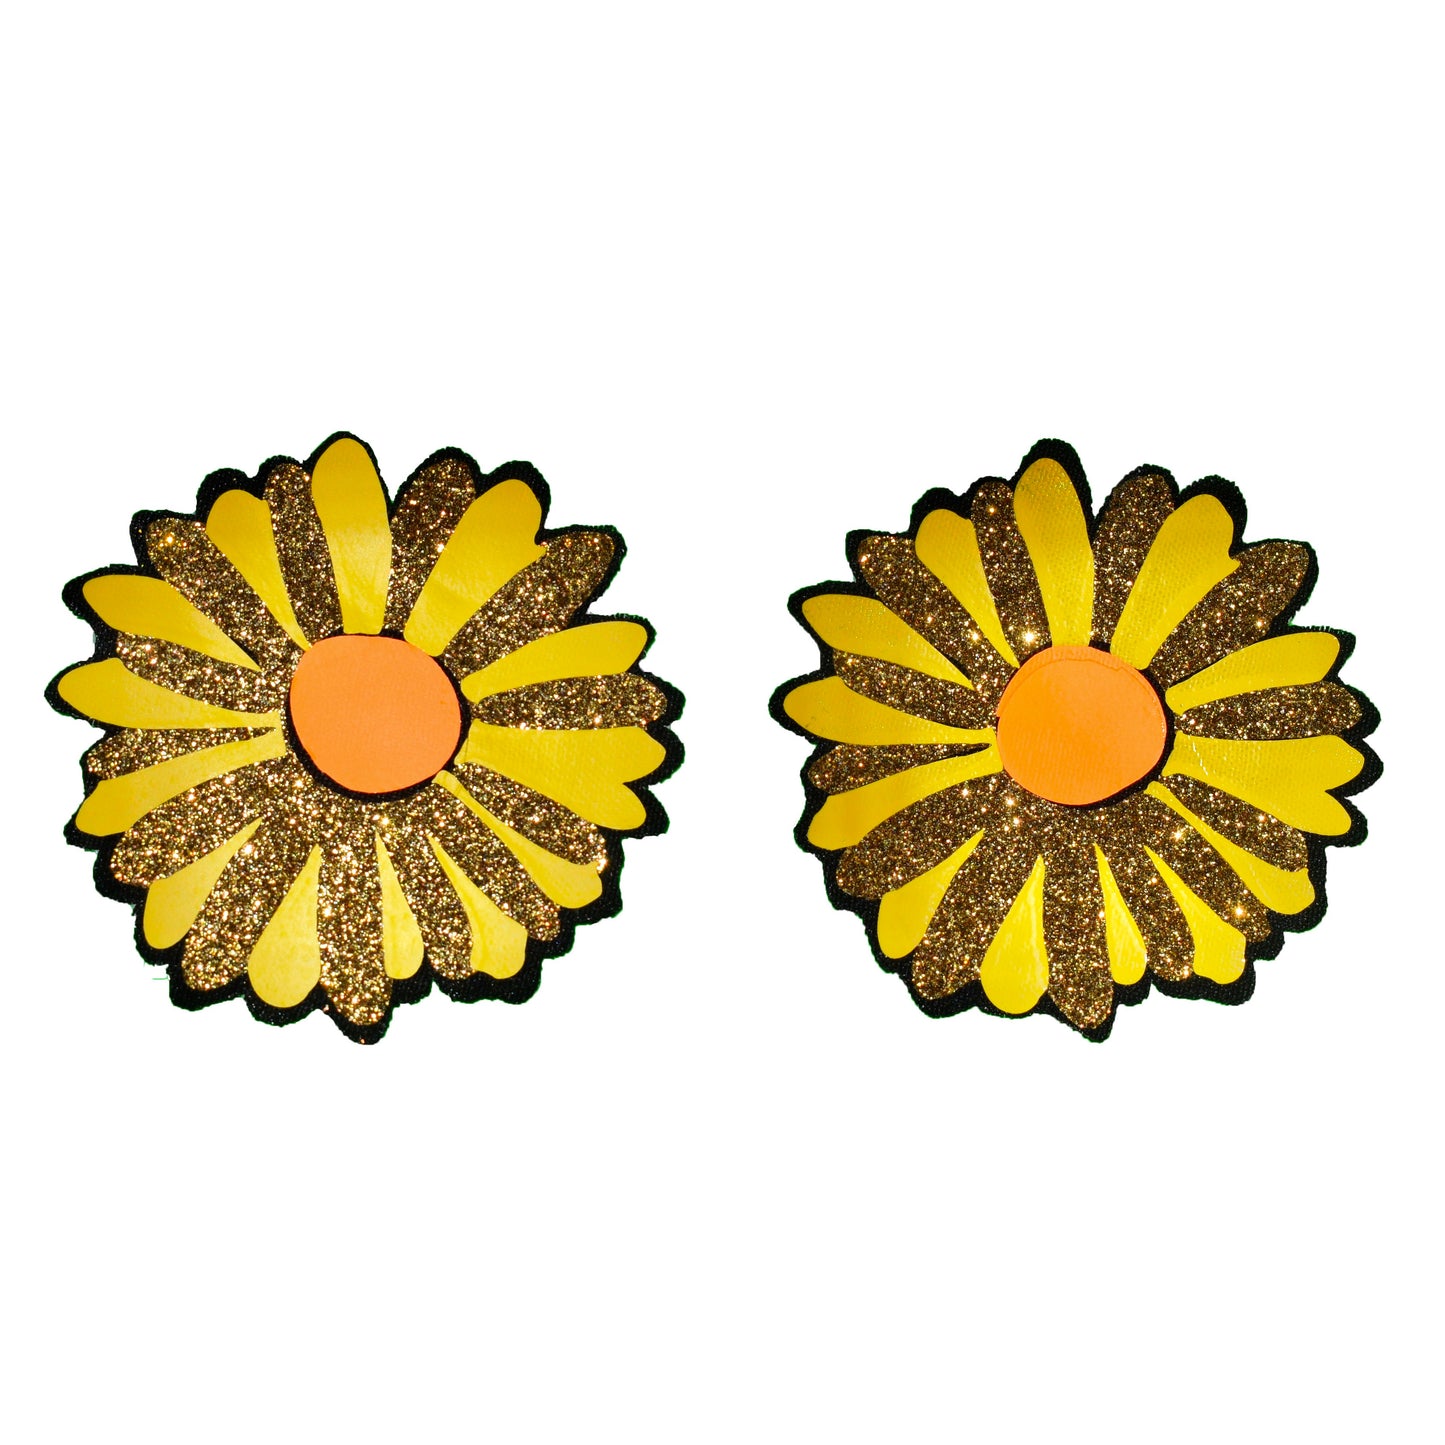 “Flower in the Sun” Reusable Pasties